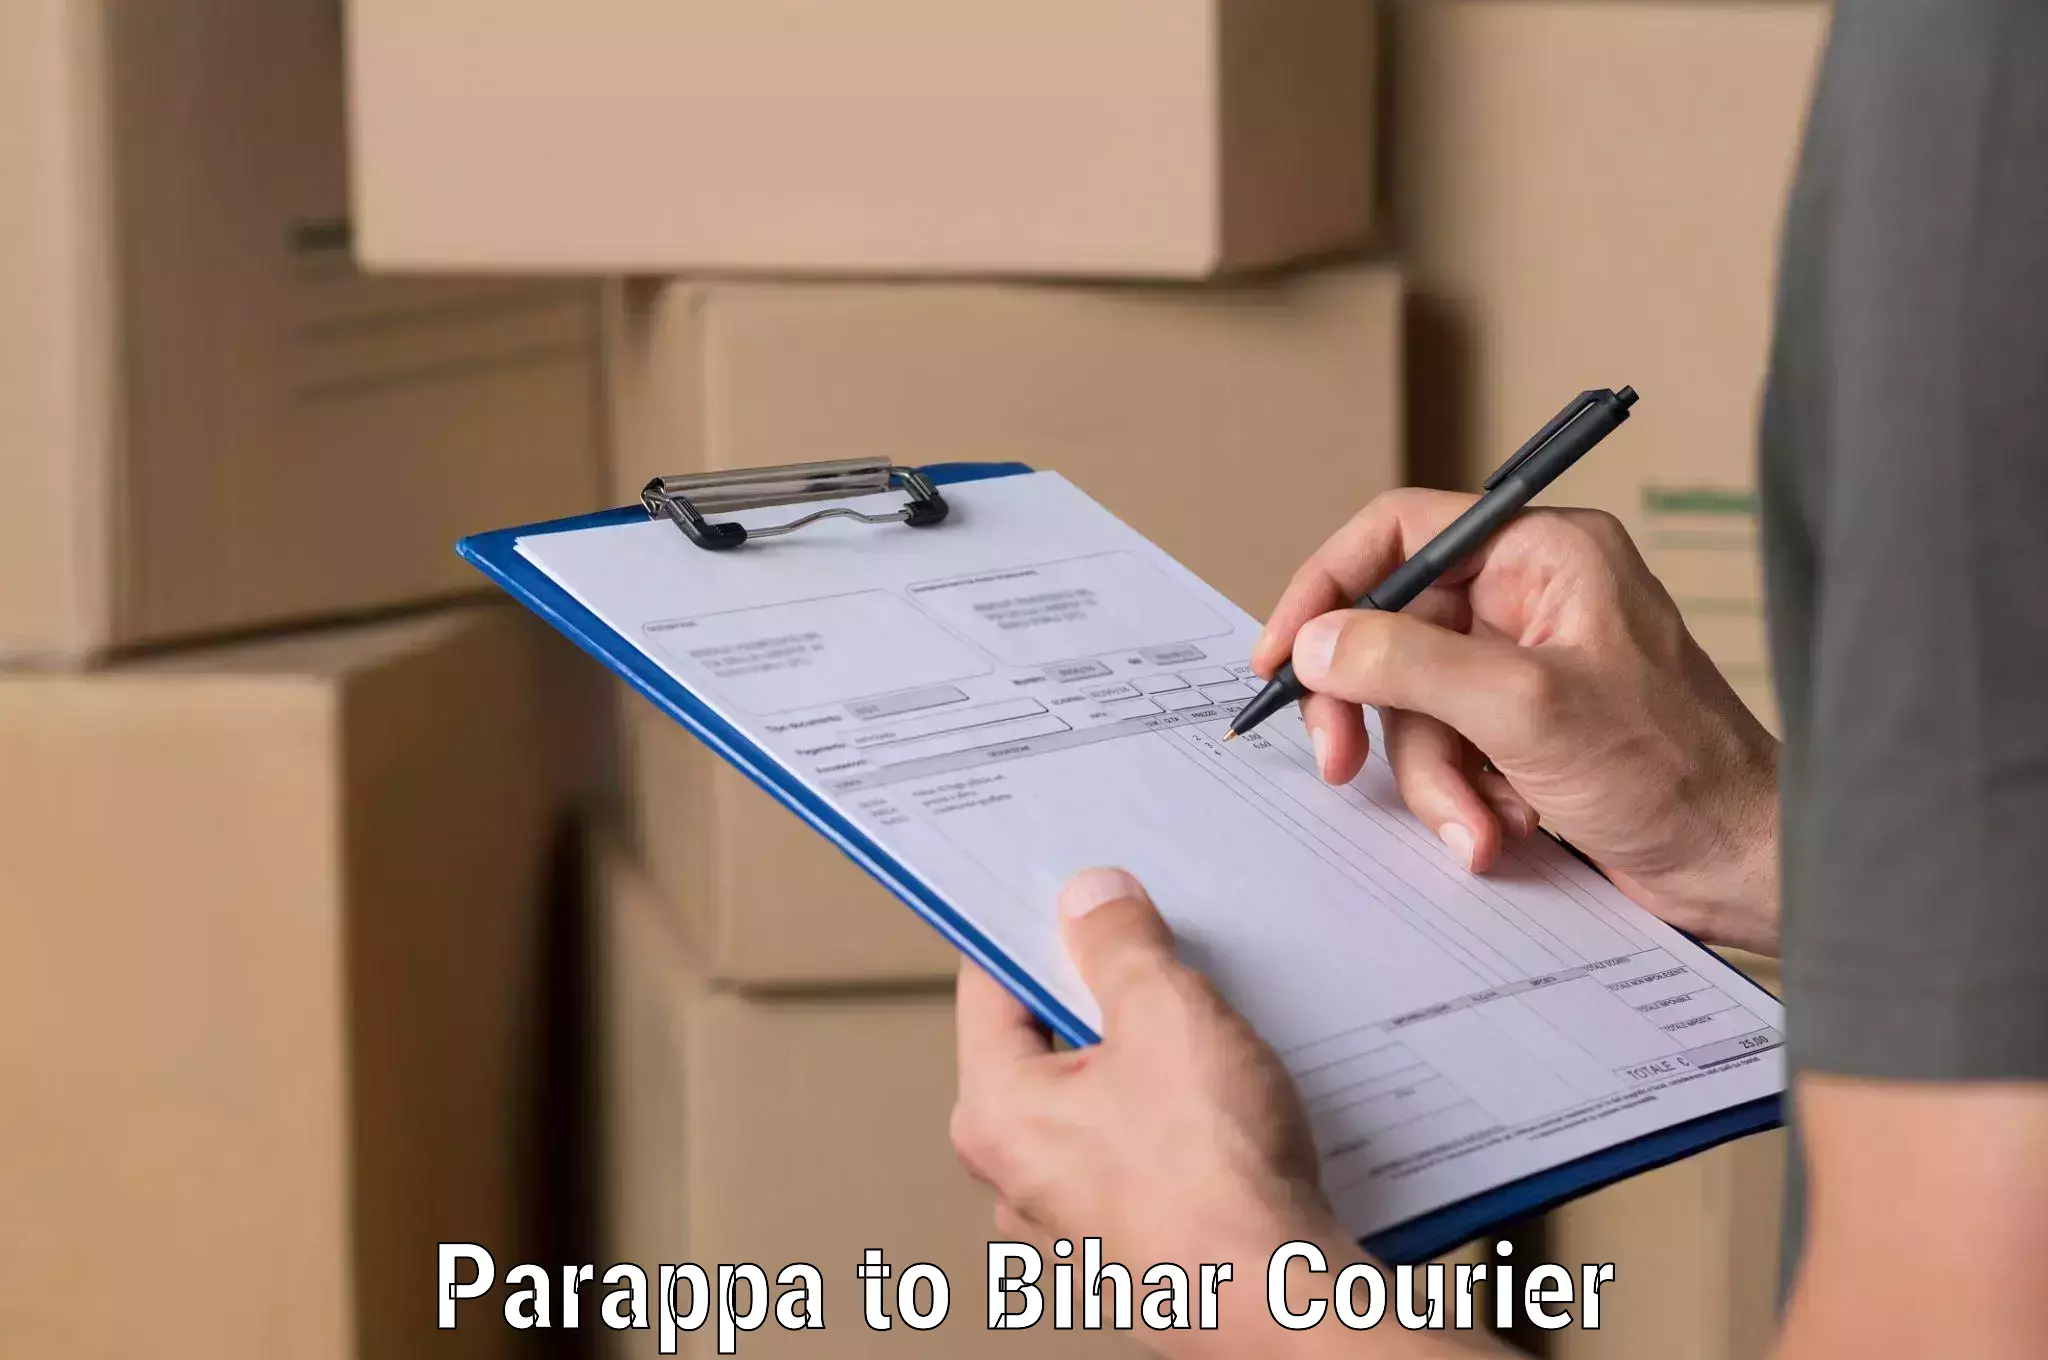 Smart shipping technology Parappa to Bihar